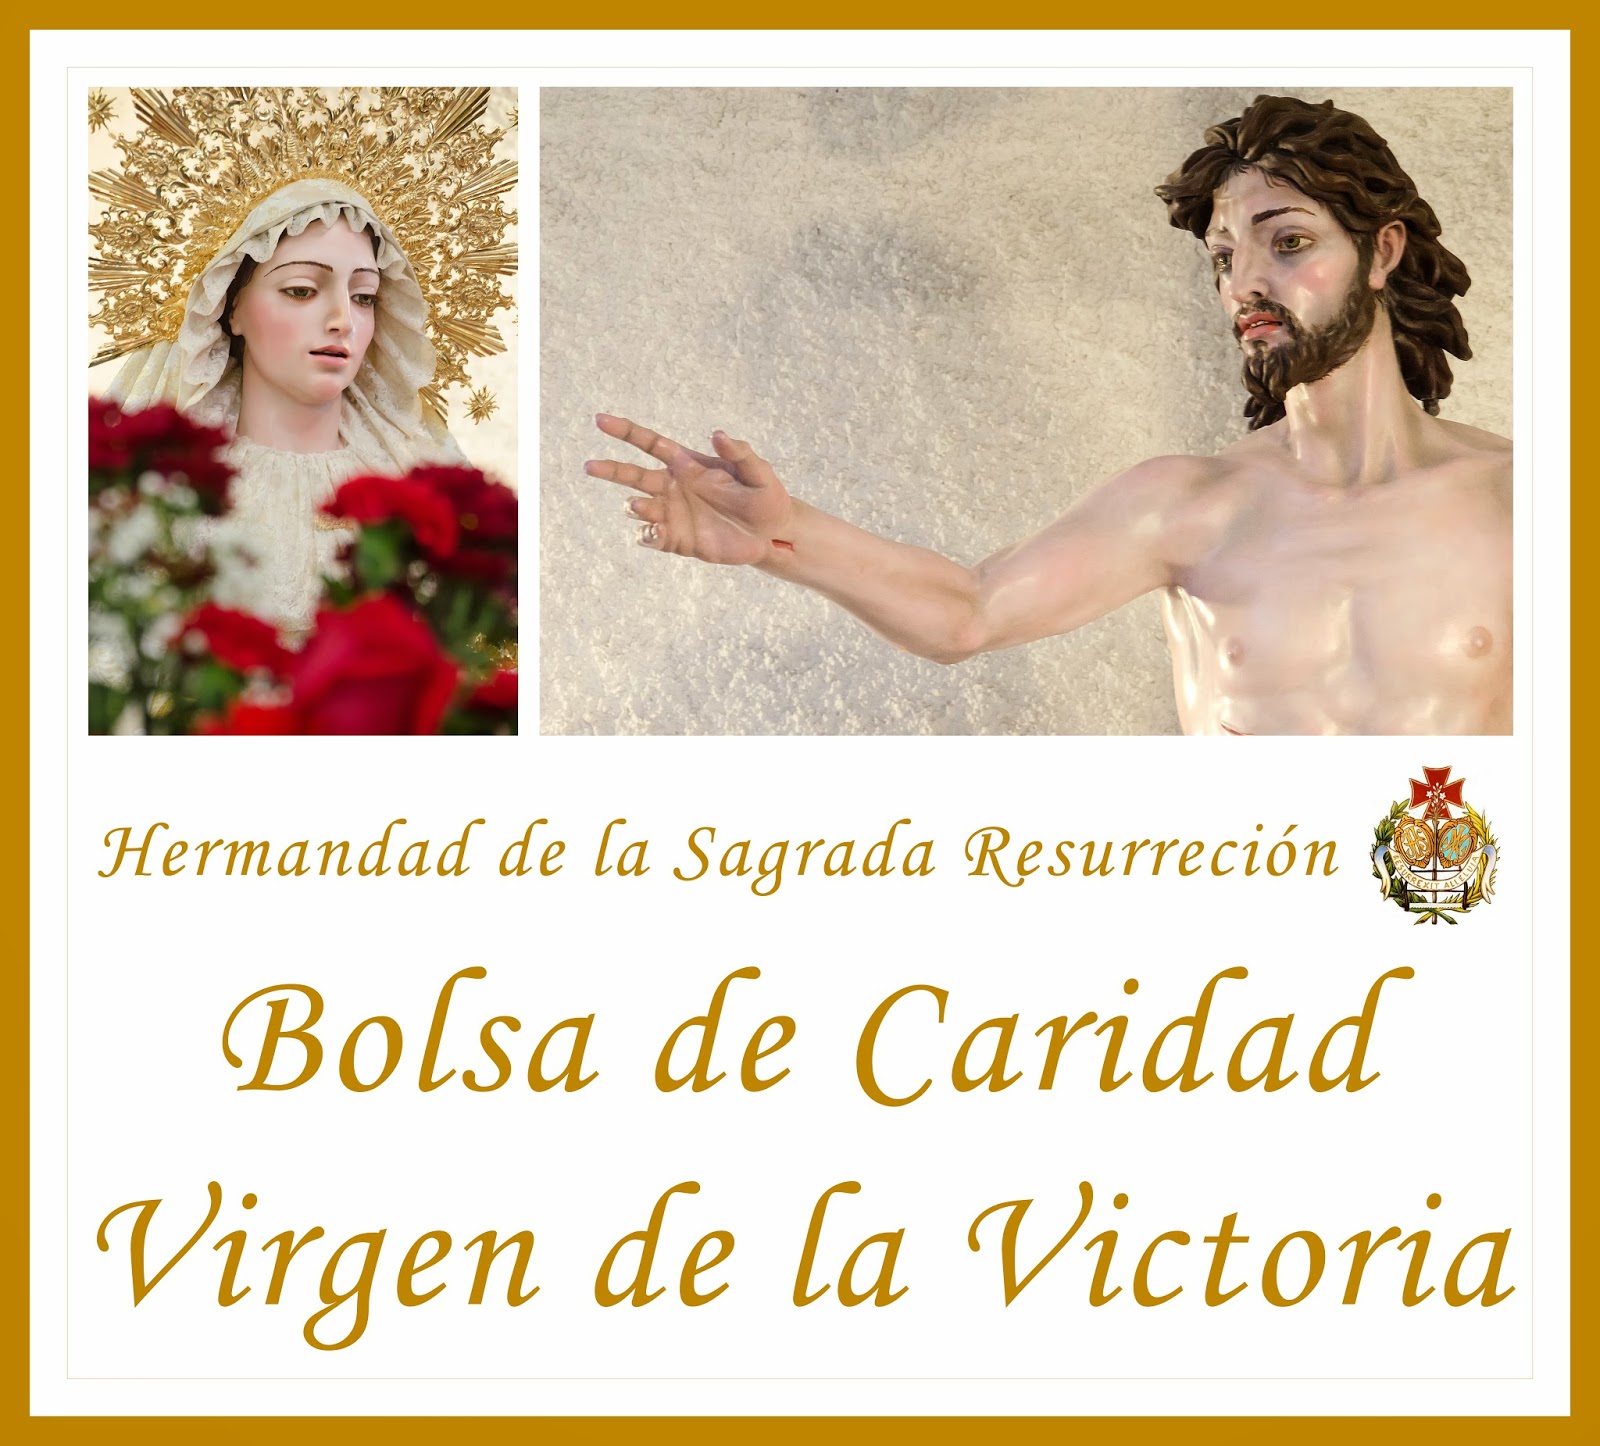 Bolsa de Caridad "Virgen de la Victoria"